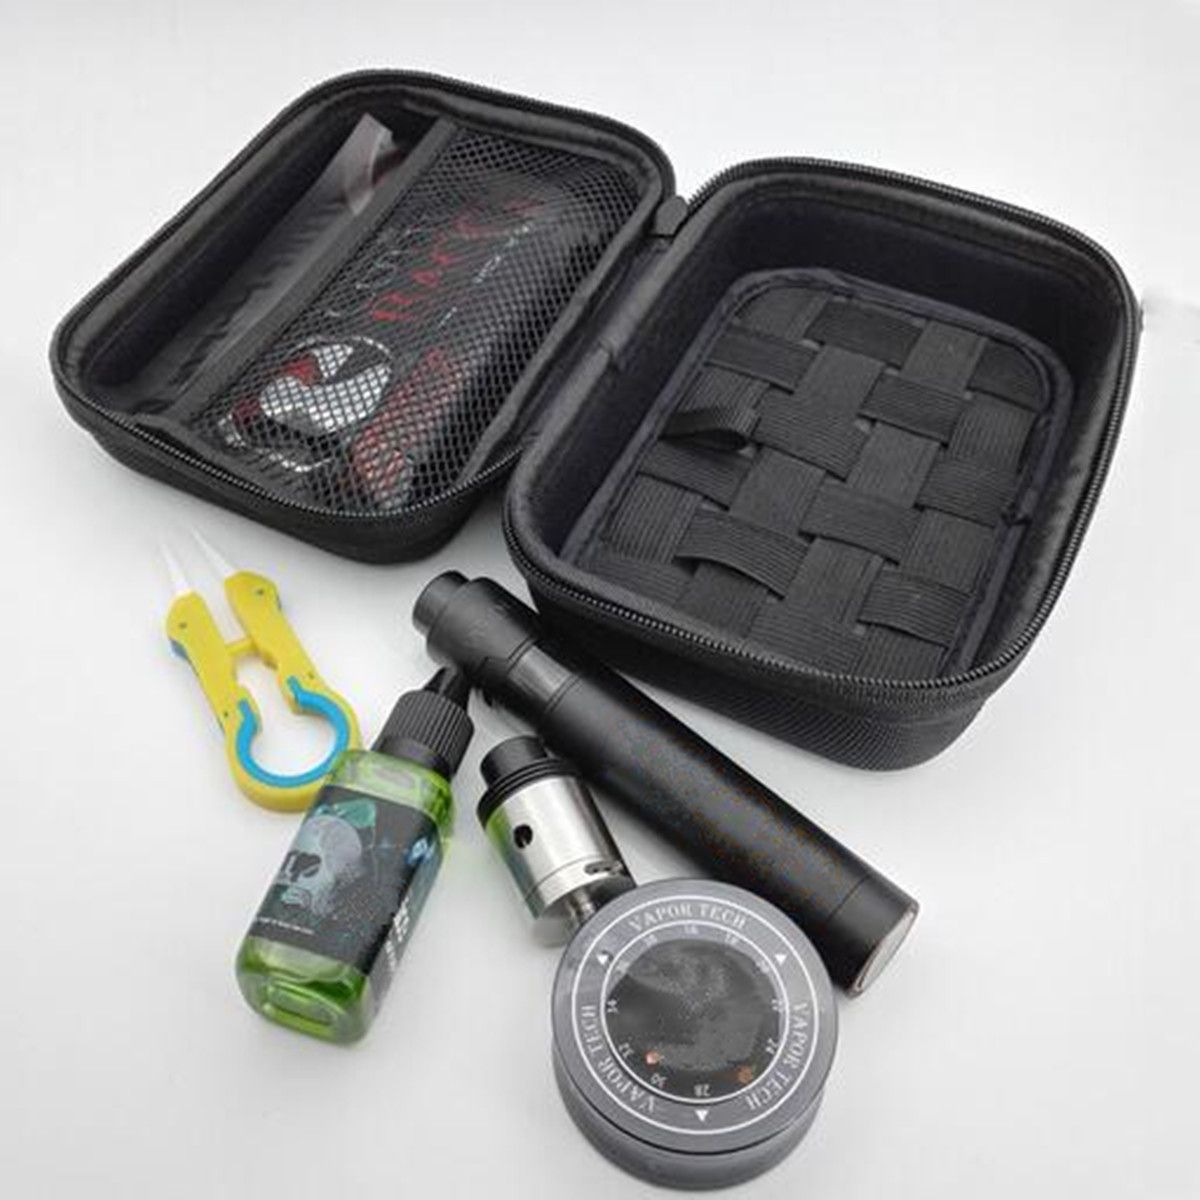 Portable-Tools-Case-Bag-For-DIY-Tool-Kit-Protable-Storage-Bag-1630666